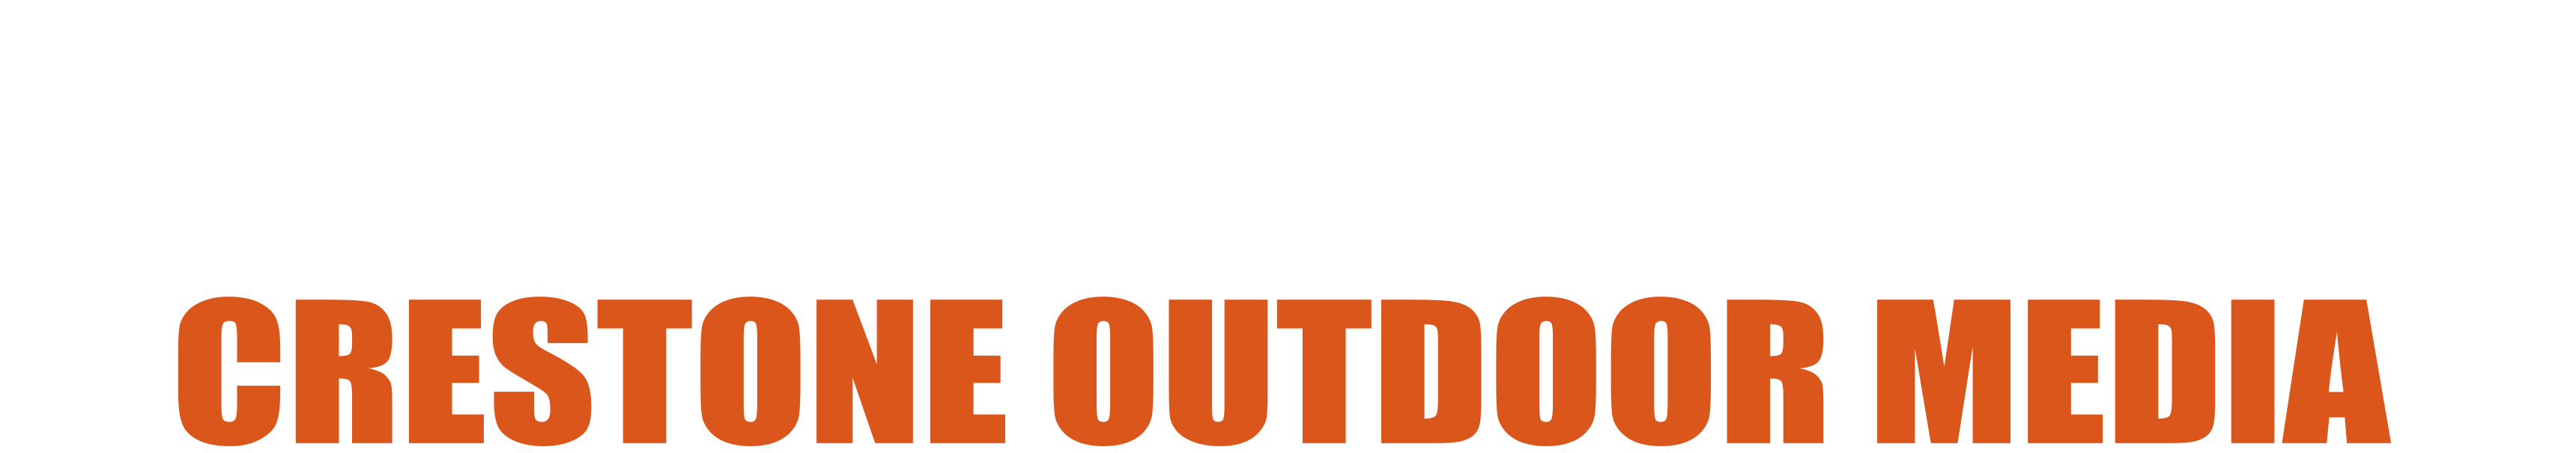 Crestone Outdoor Media LLC Logo White